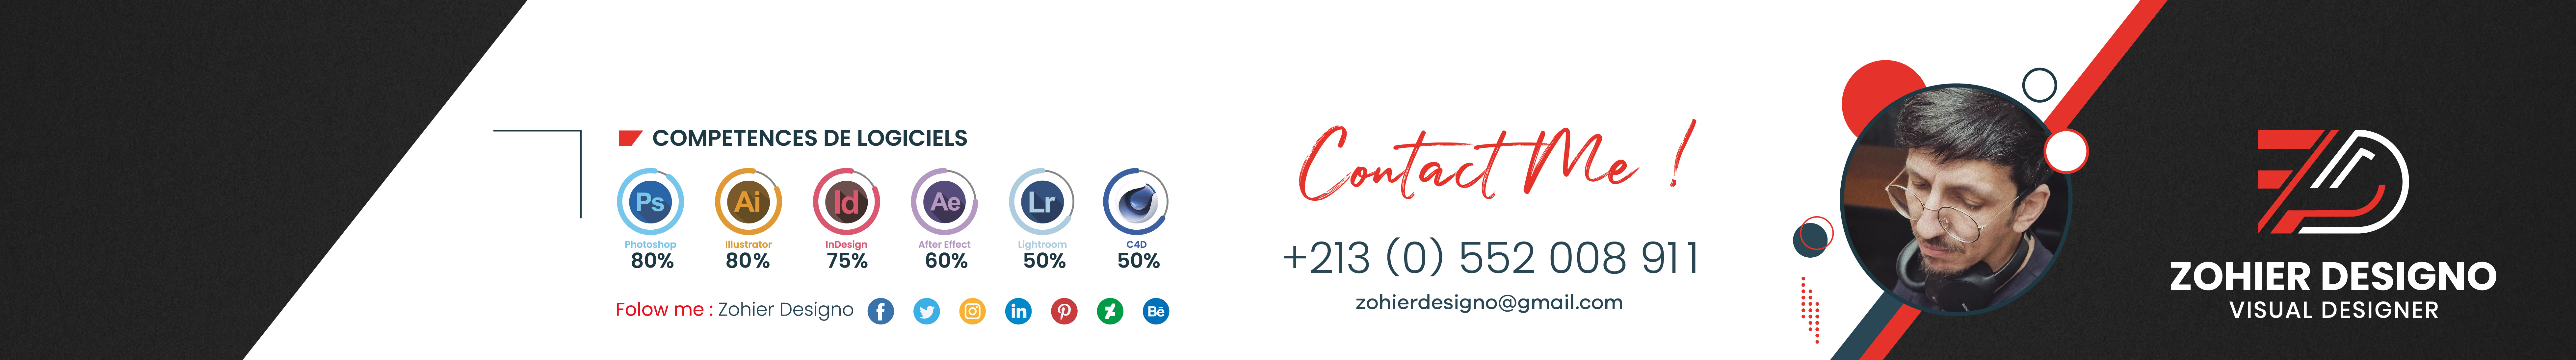 Zohier Designos profilbanner